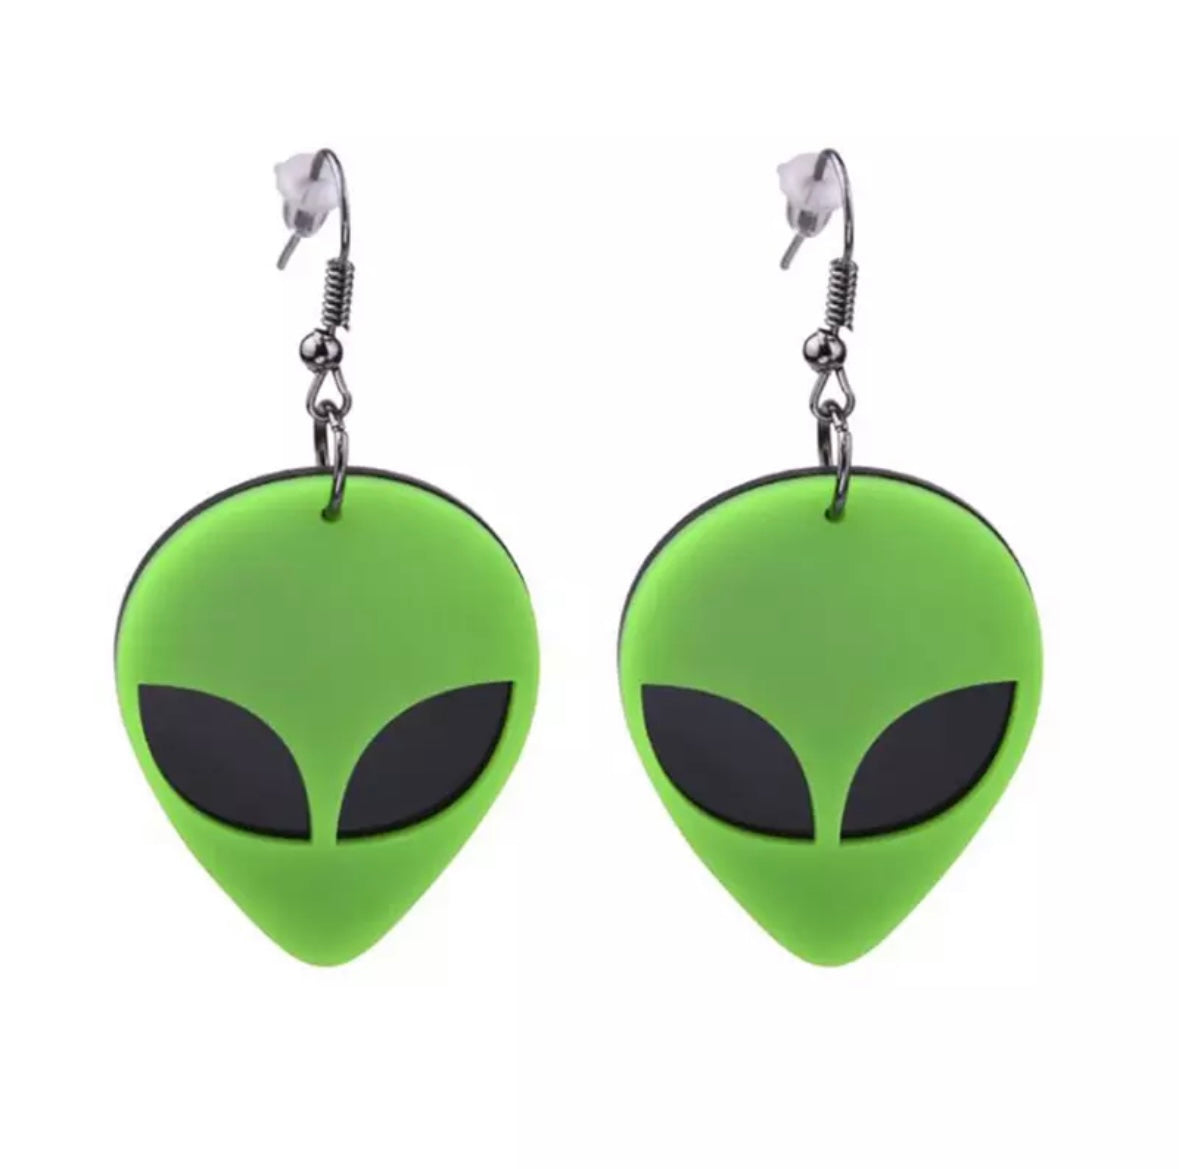 Alien Earrings | Earrings Accessories for Space Enthusiasts